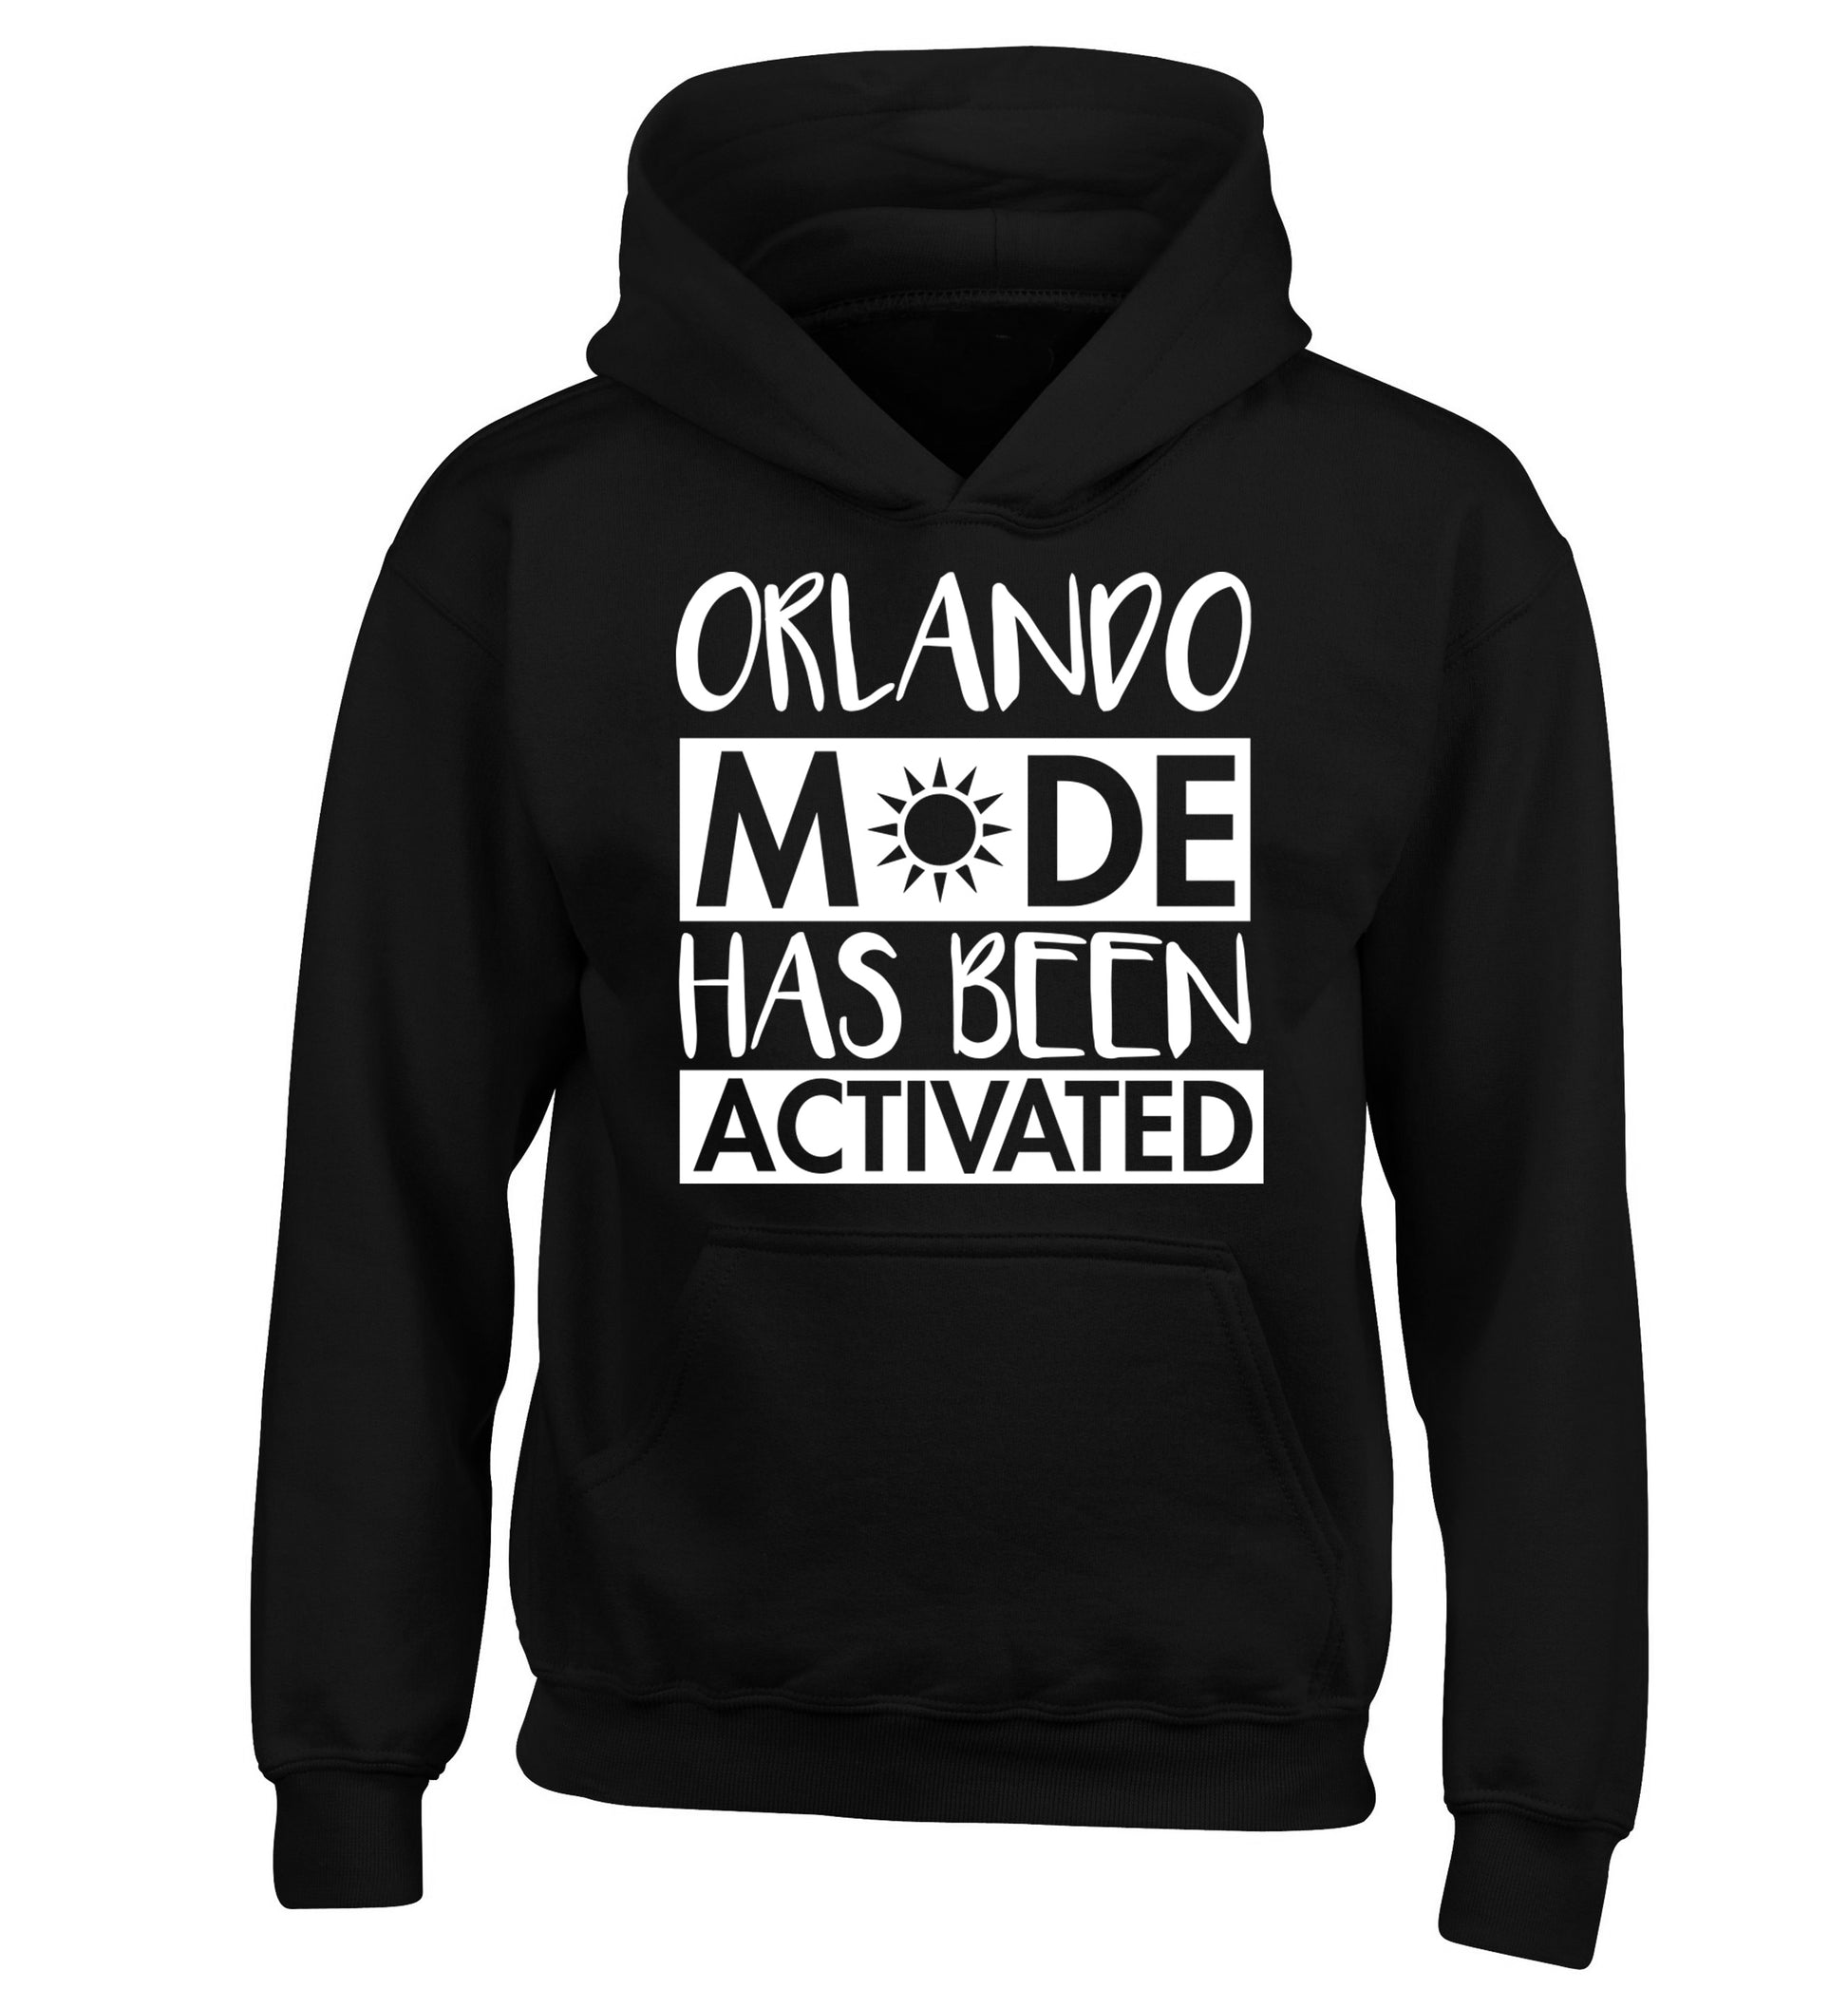 Orlando mode has been activated children's black hoodie 12-13 Years